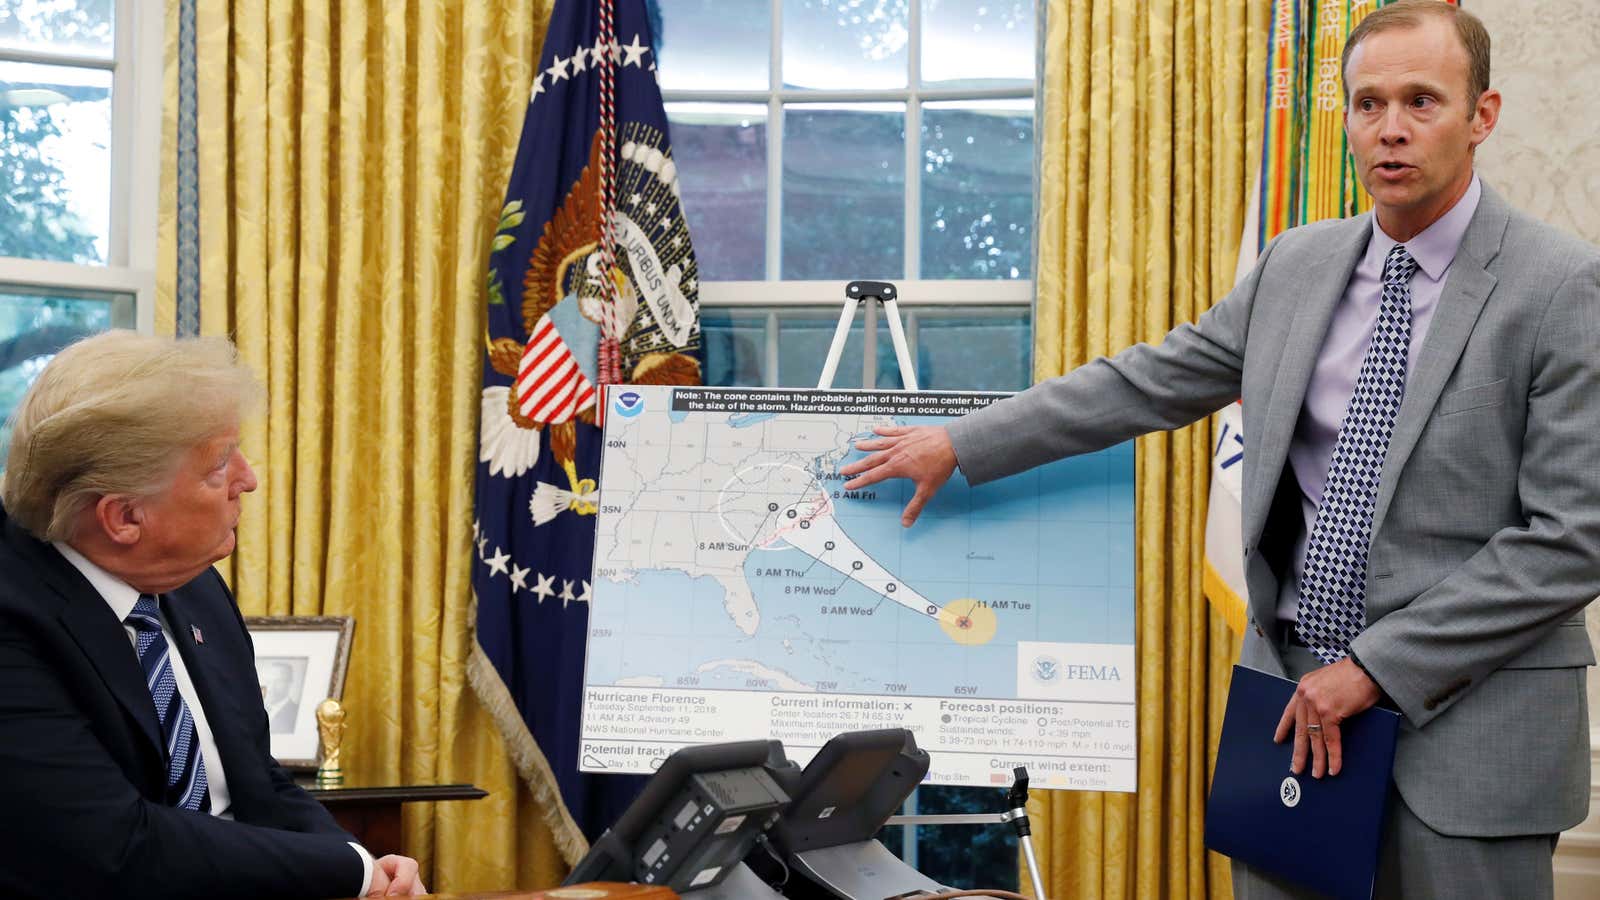 Long briefs Trump on hurricane Florence’s path.